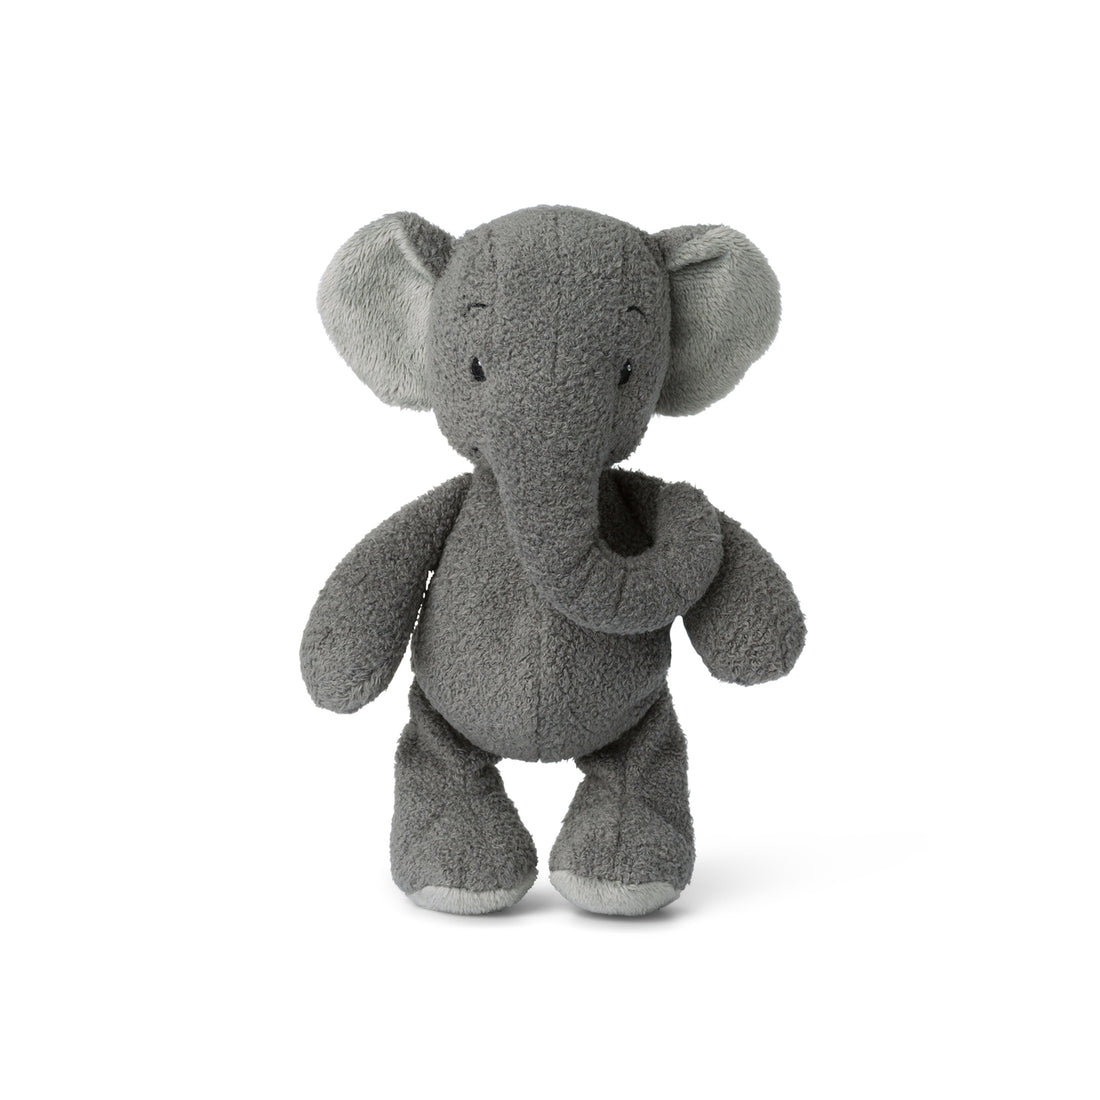 wwf-ebu-the-elephant-with-crinkle-ears-22cm-wwf-16193006- (2)